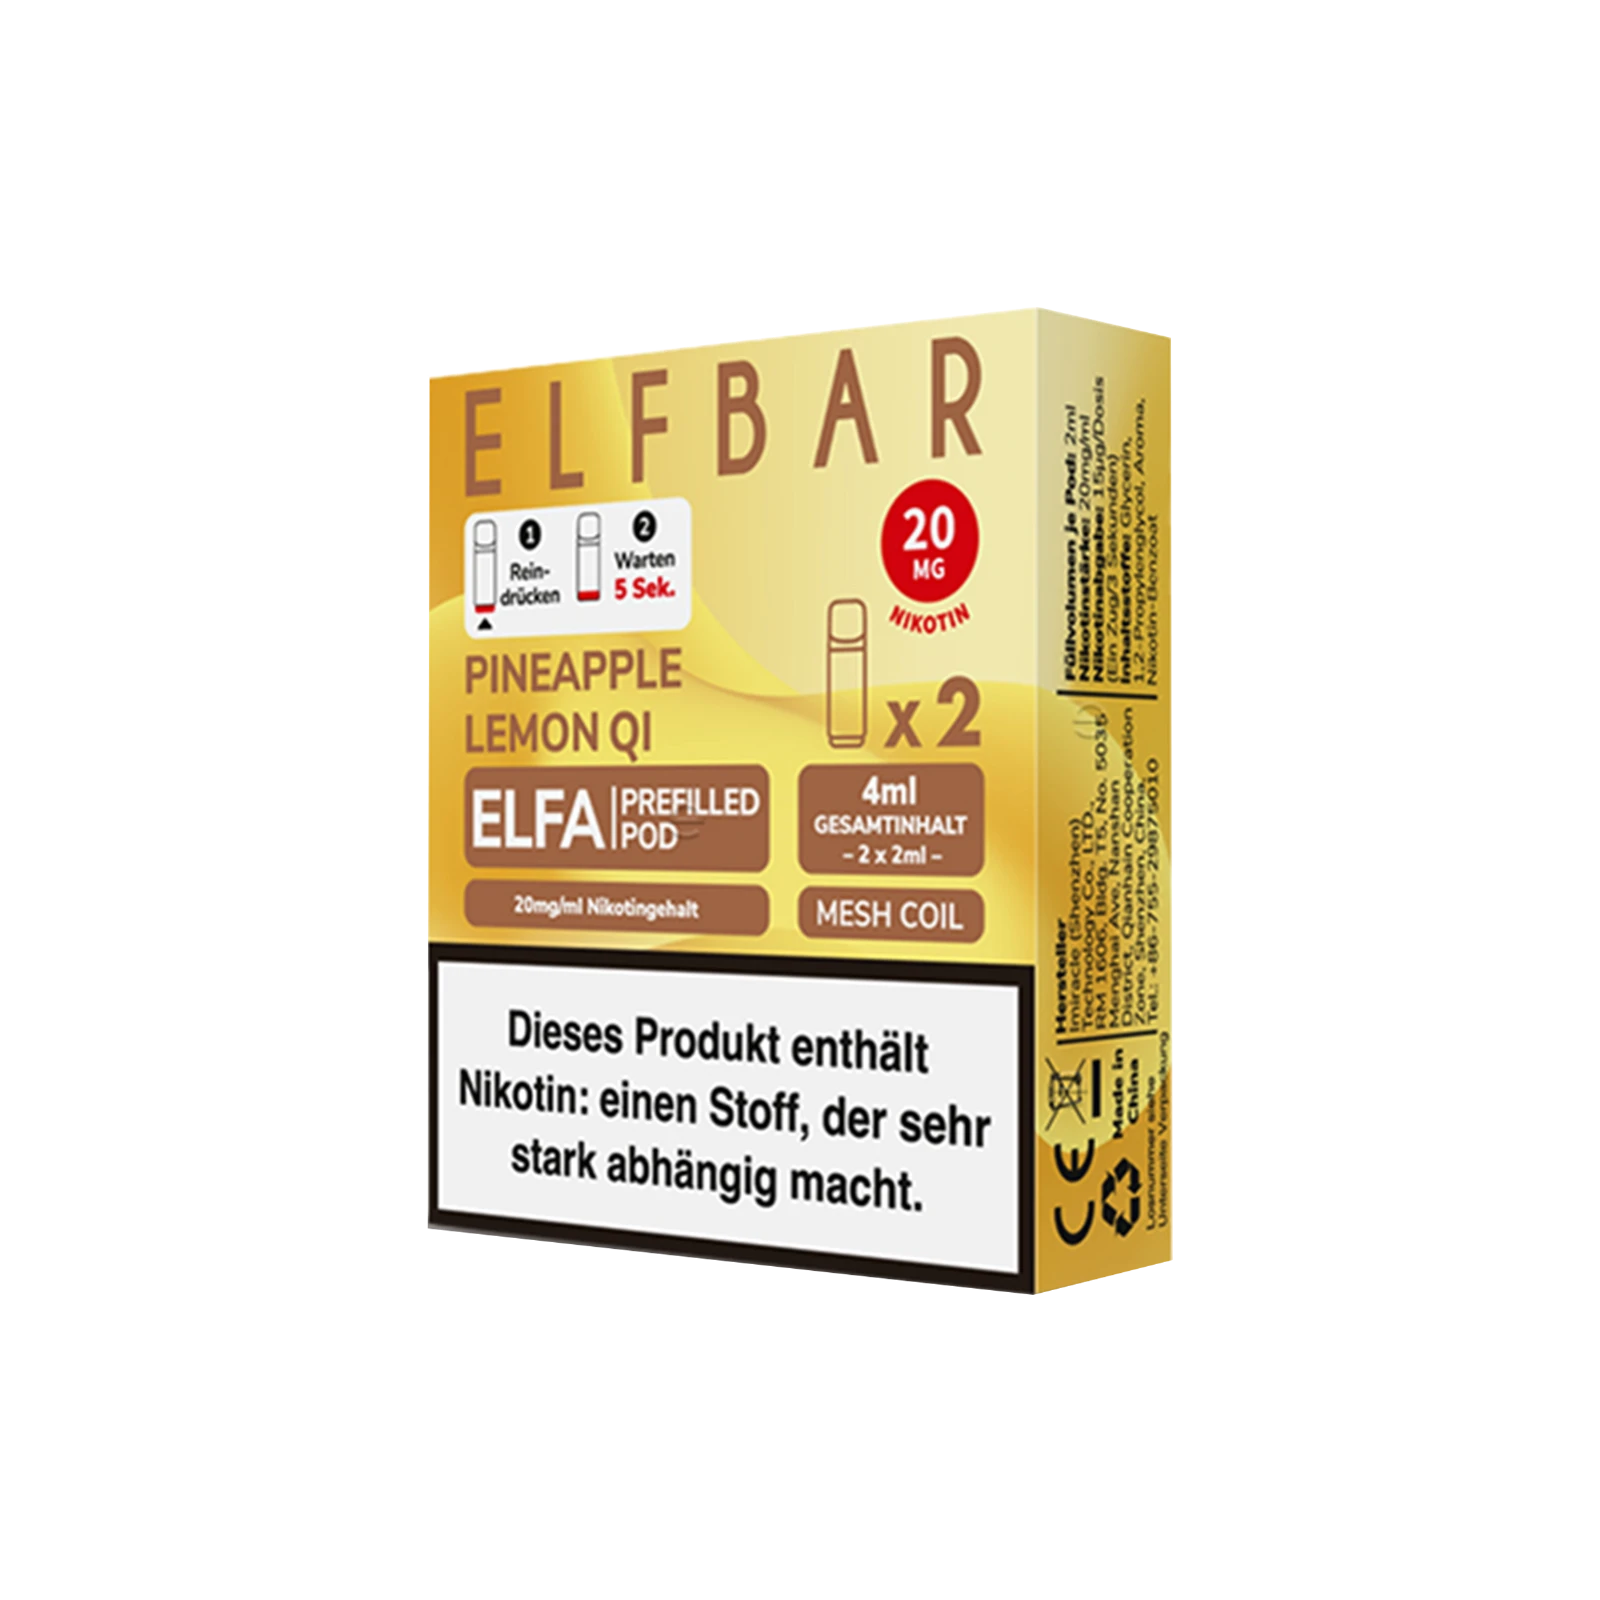 Elf Bar ELFA Prefilled Pod Pineapple Lemon QI | Neue Liquid Sorten1